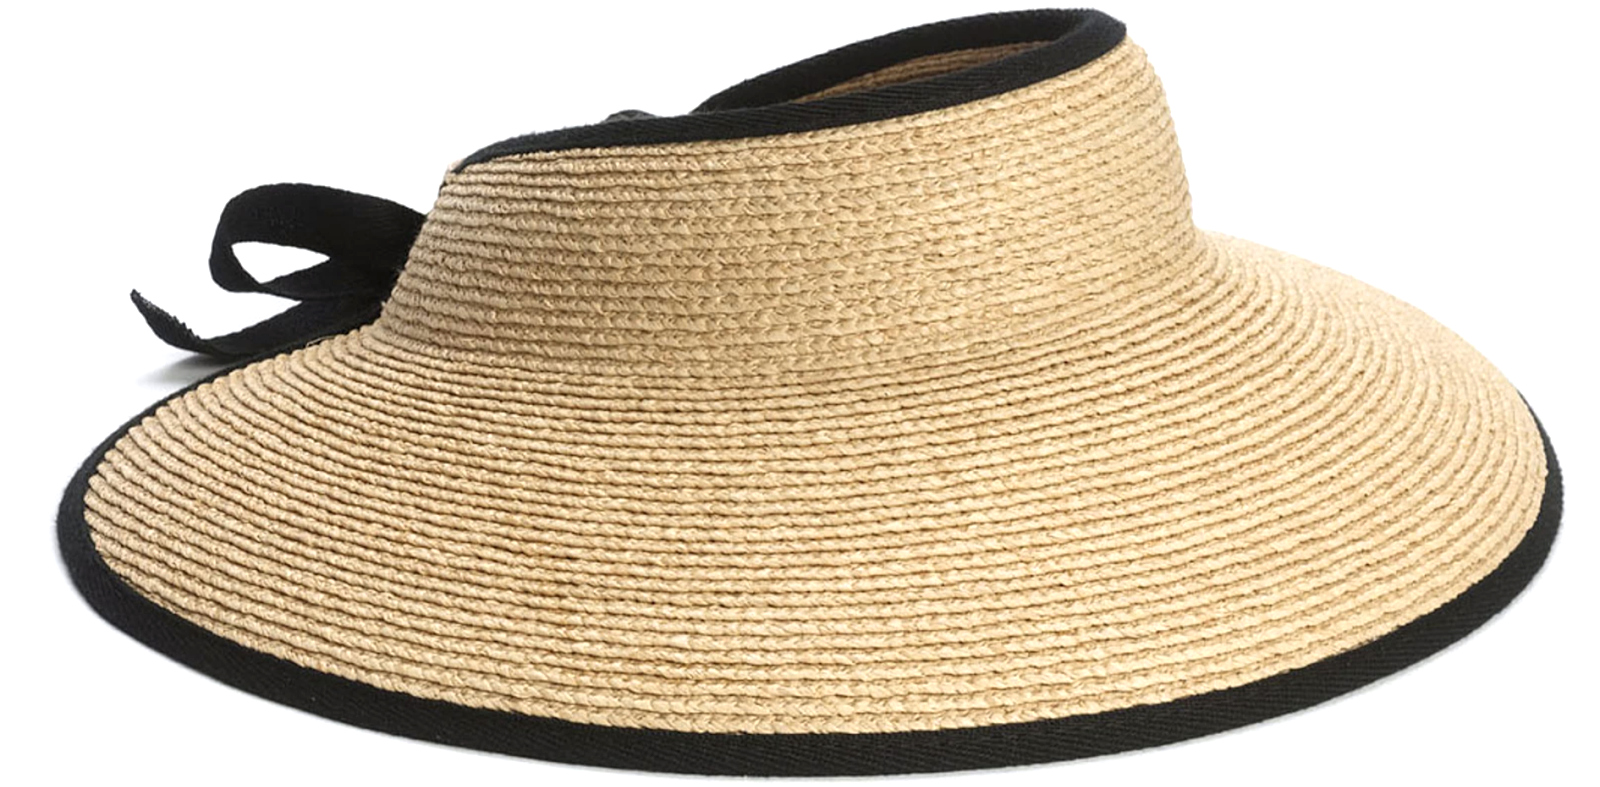 Sidiou Group Summer Empty Top Hats Cowboy Hat with Broad Brim Folding Straw Hat Detachable Sun Visor Hat Beach Hats for Women